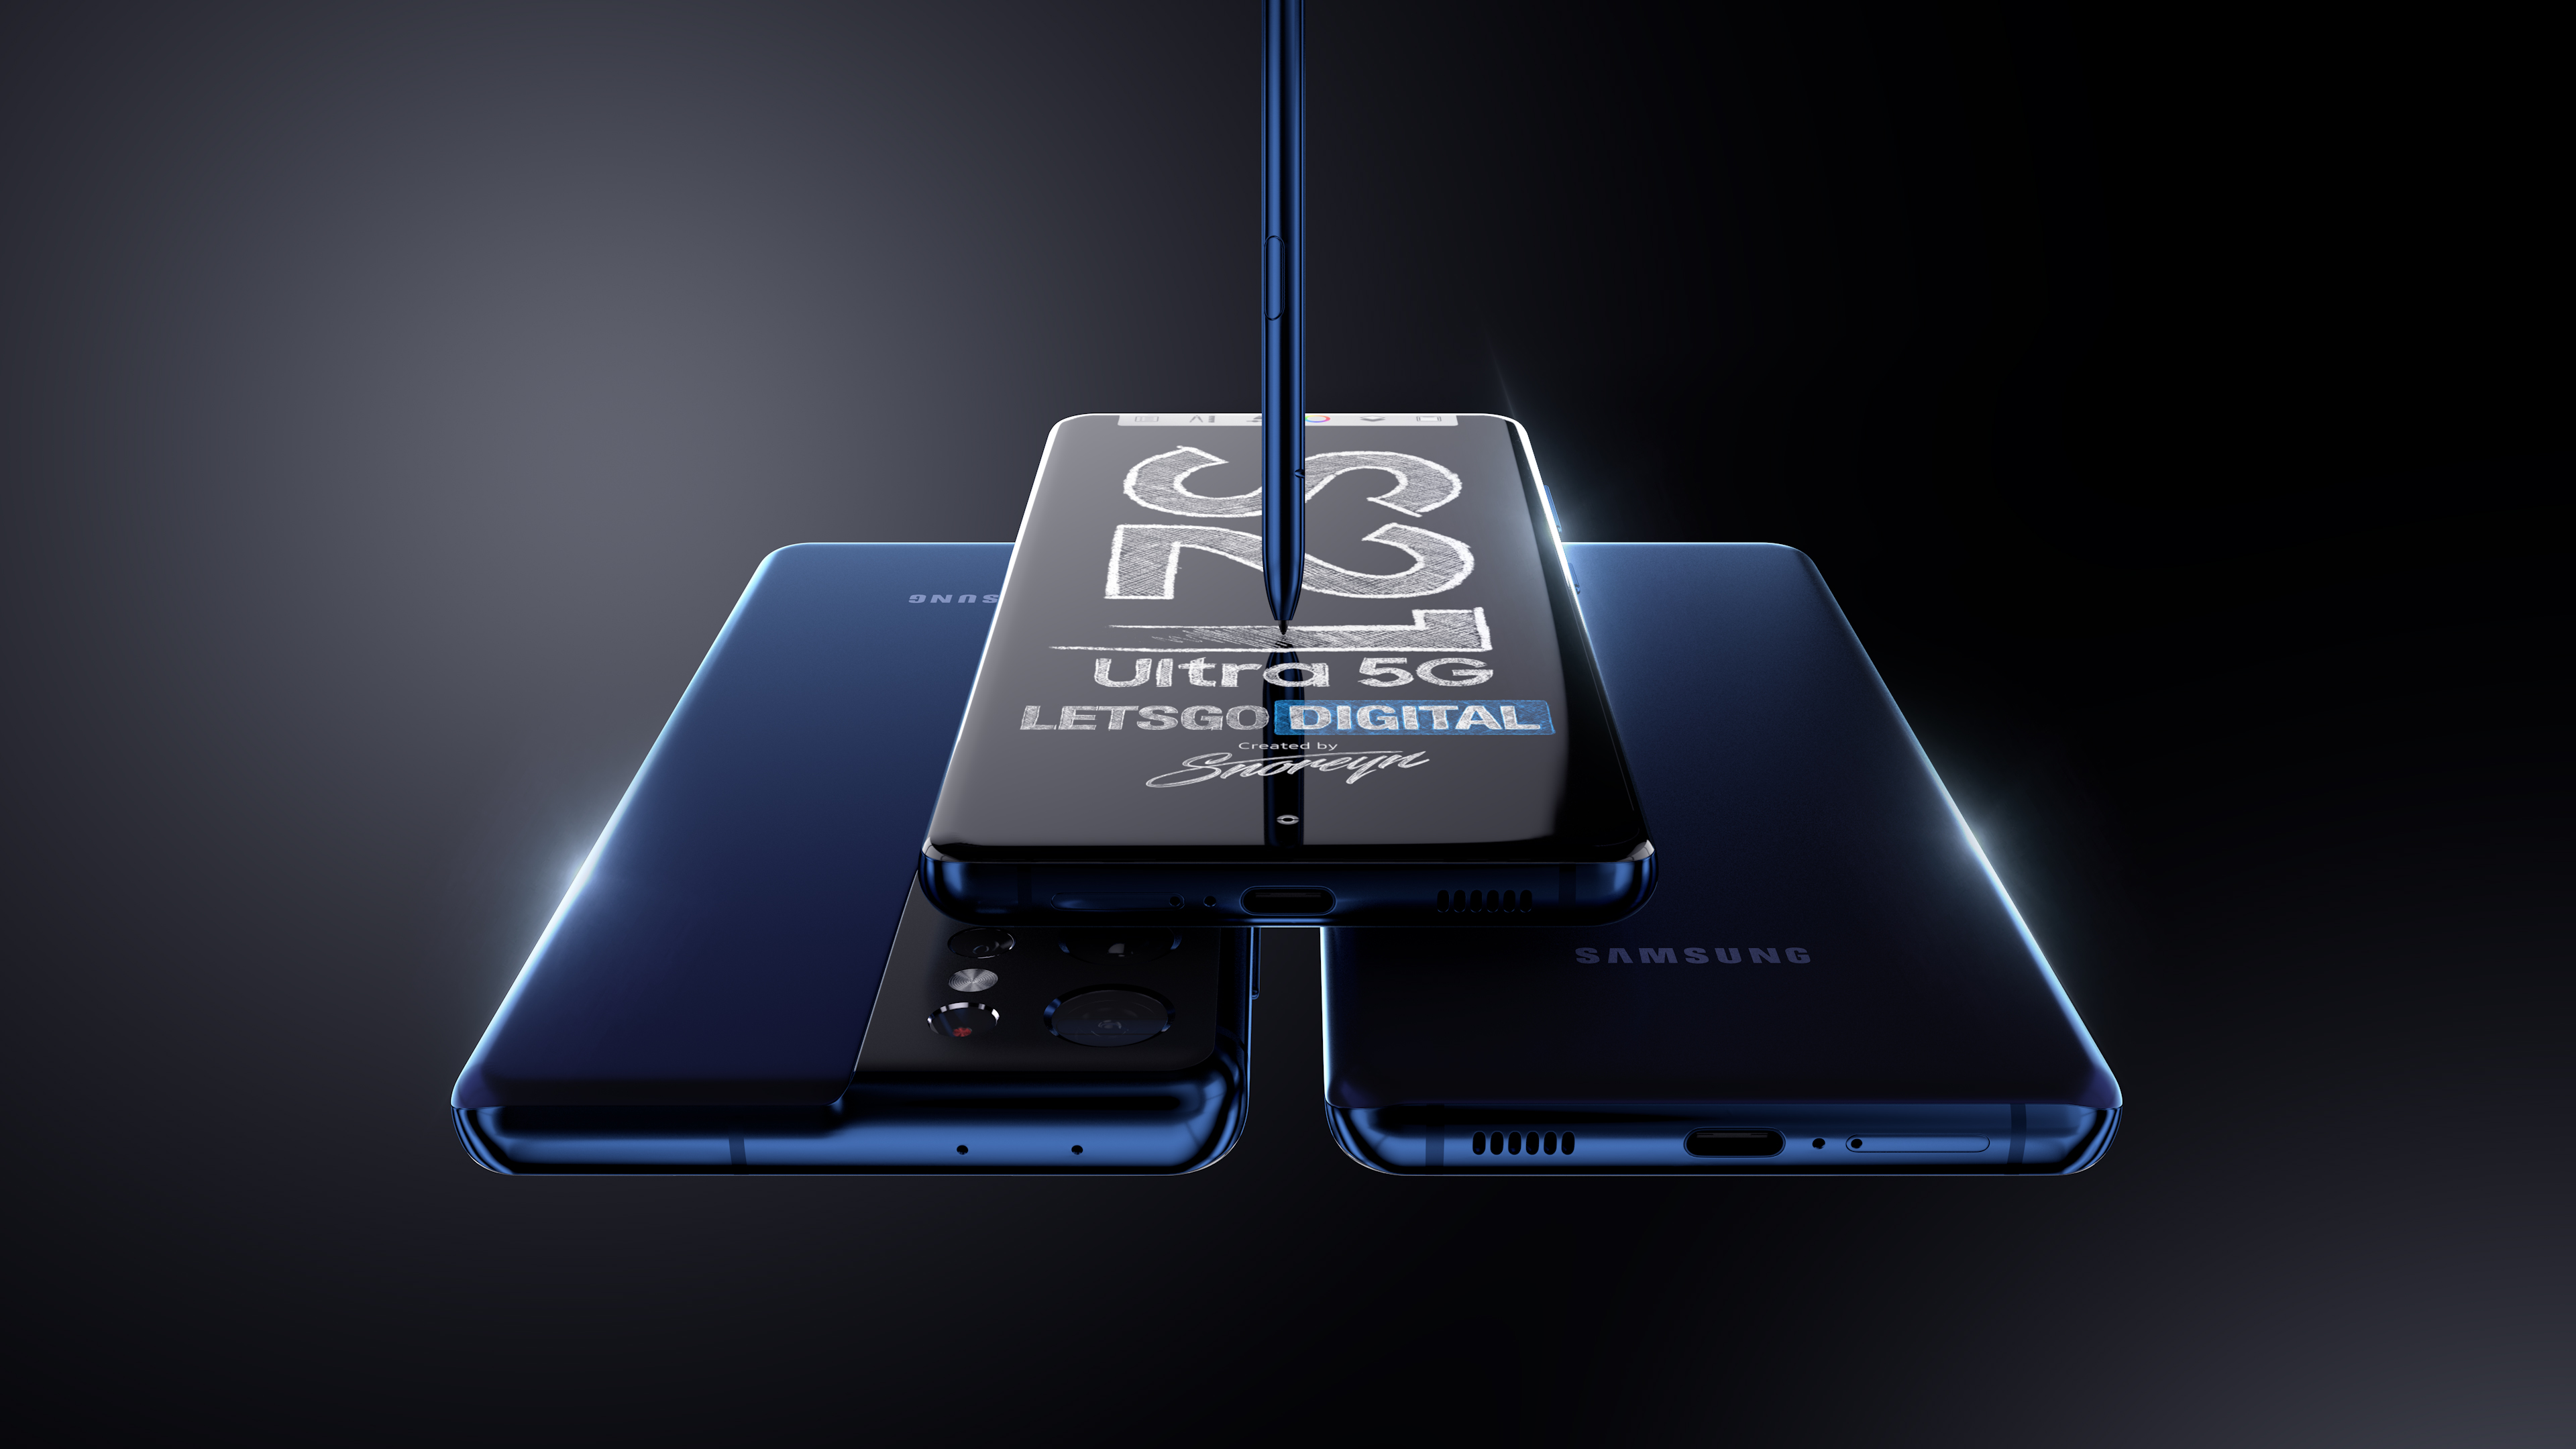 Samsung Galaxy S21 Ultra With S Pen Letsgodigital